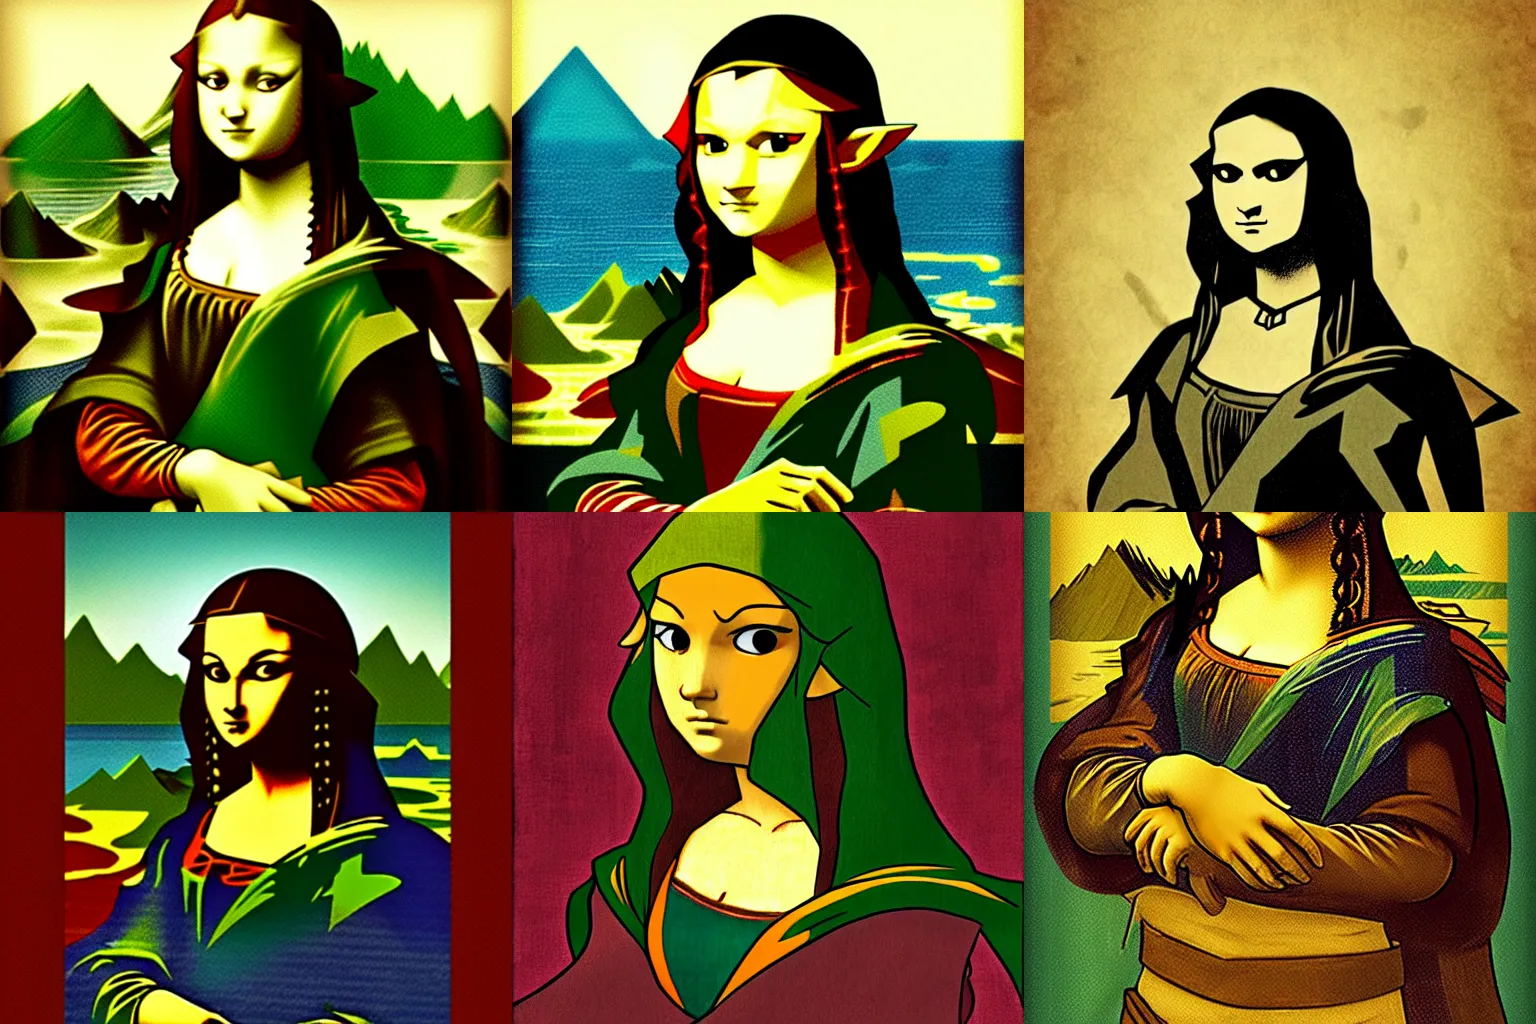 Prompt: Link (Legend of Zelda Windwaker) in the style of Mona Lisa, by Leonardo DaVinci